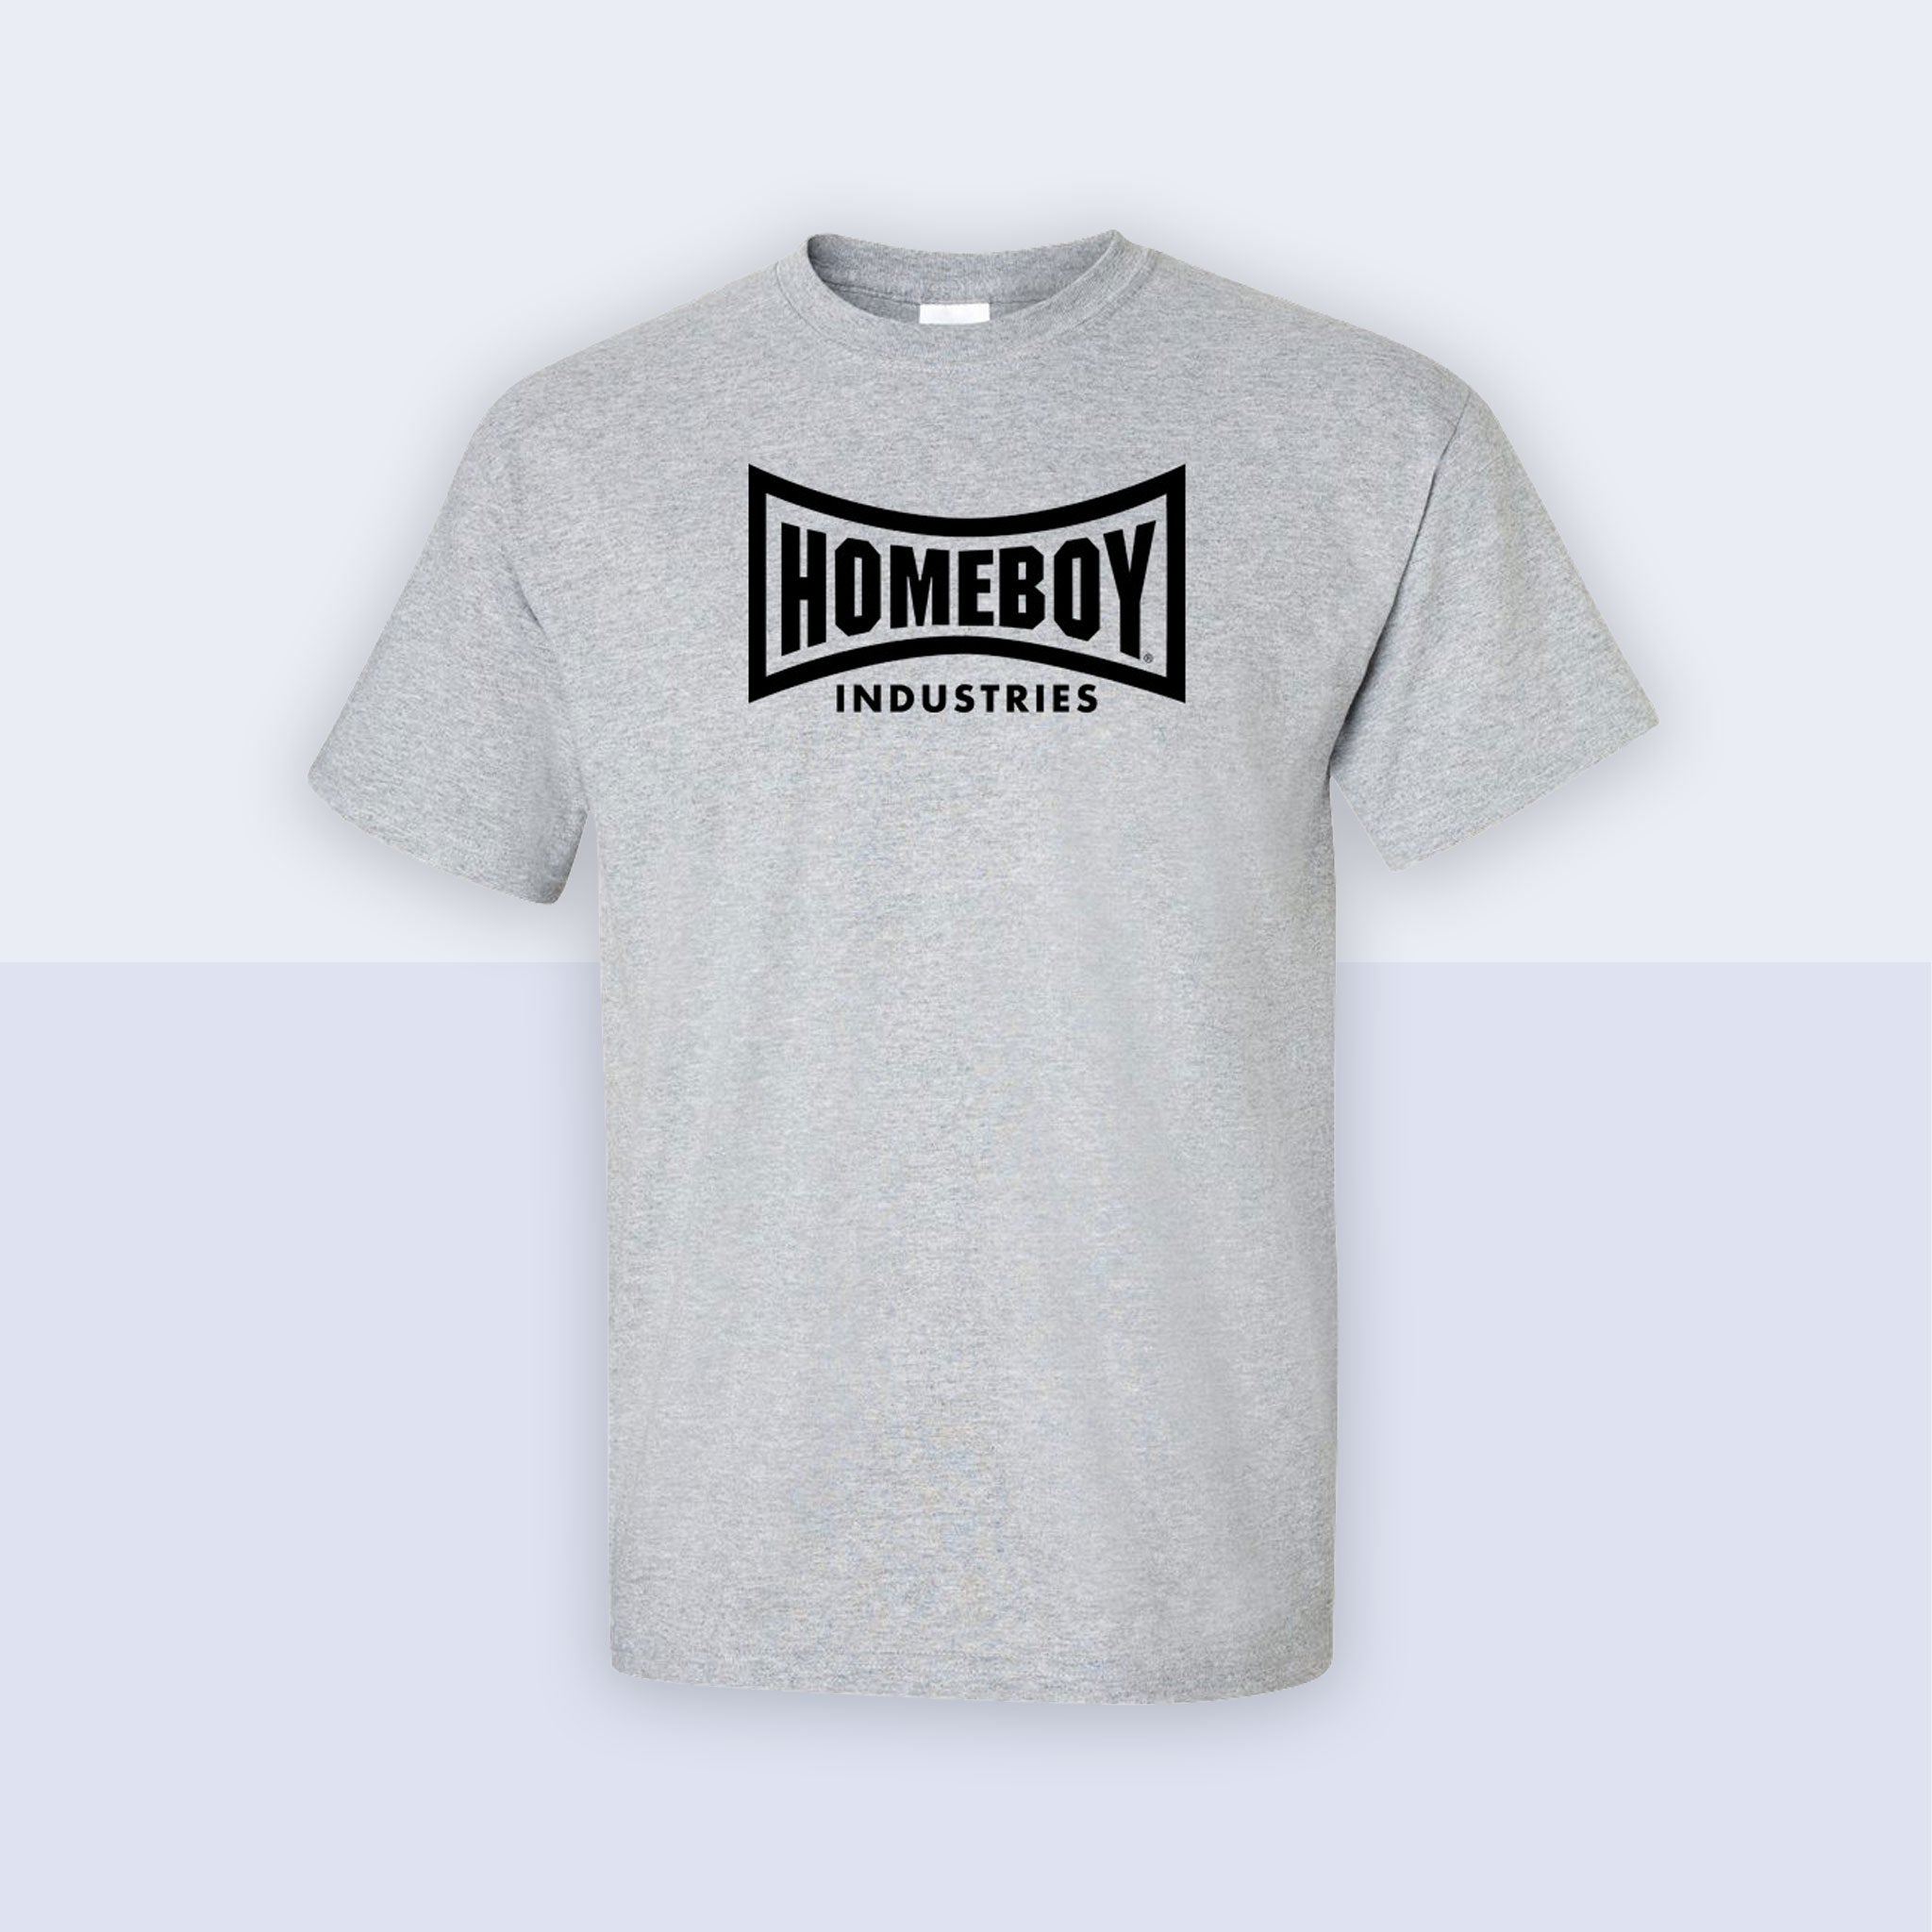 Homeboy-T-Shirt_grey.jpg